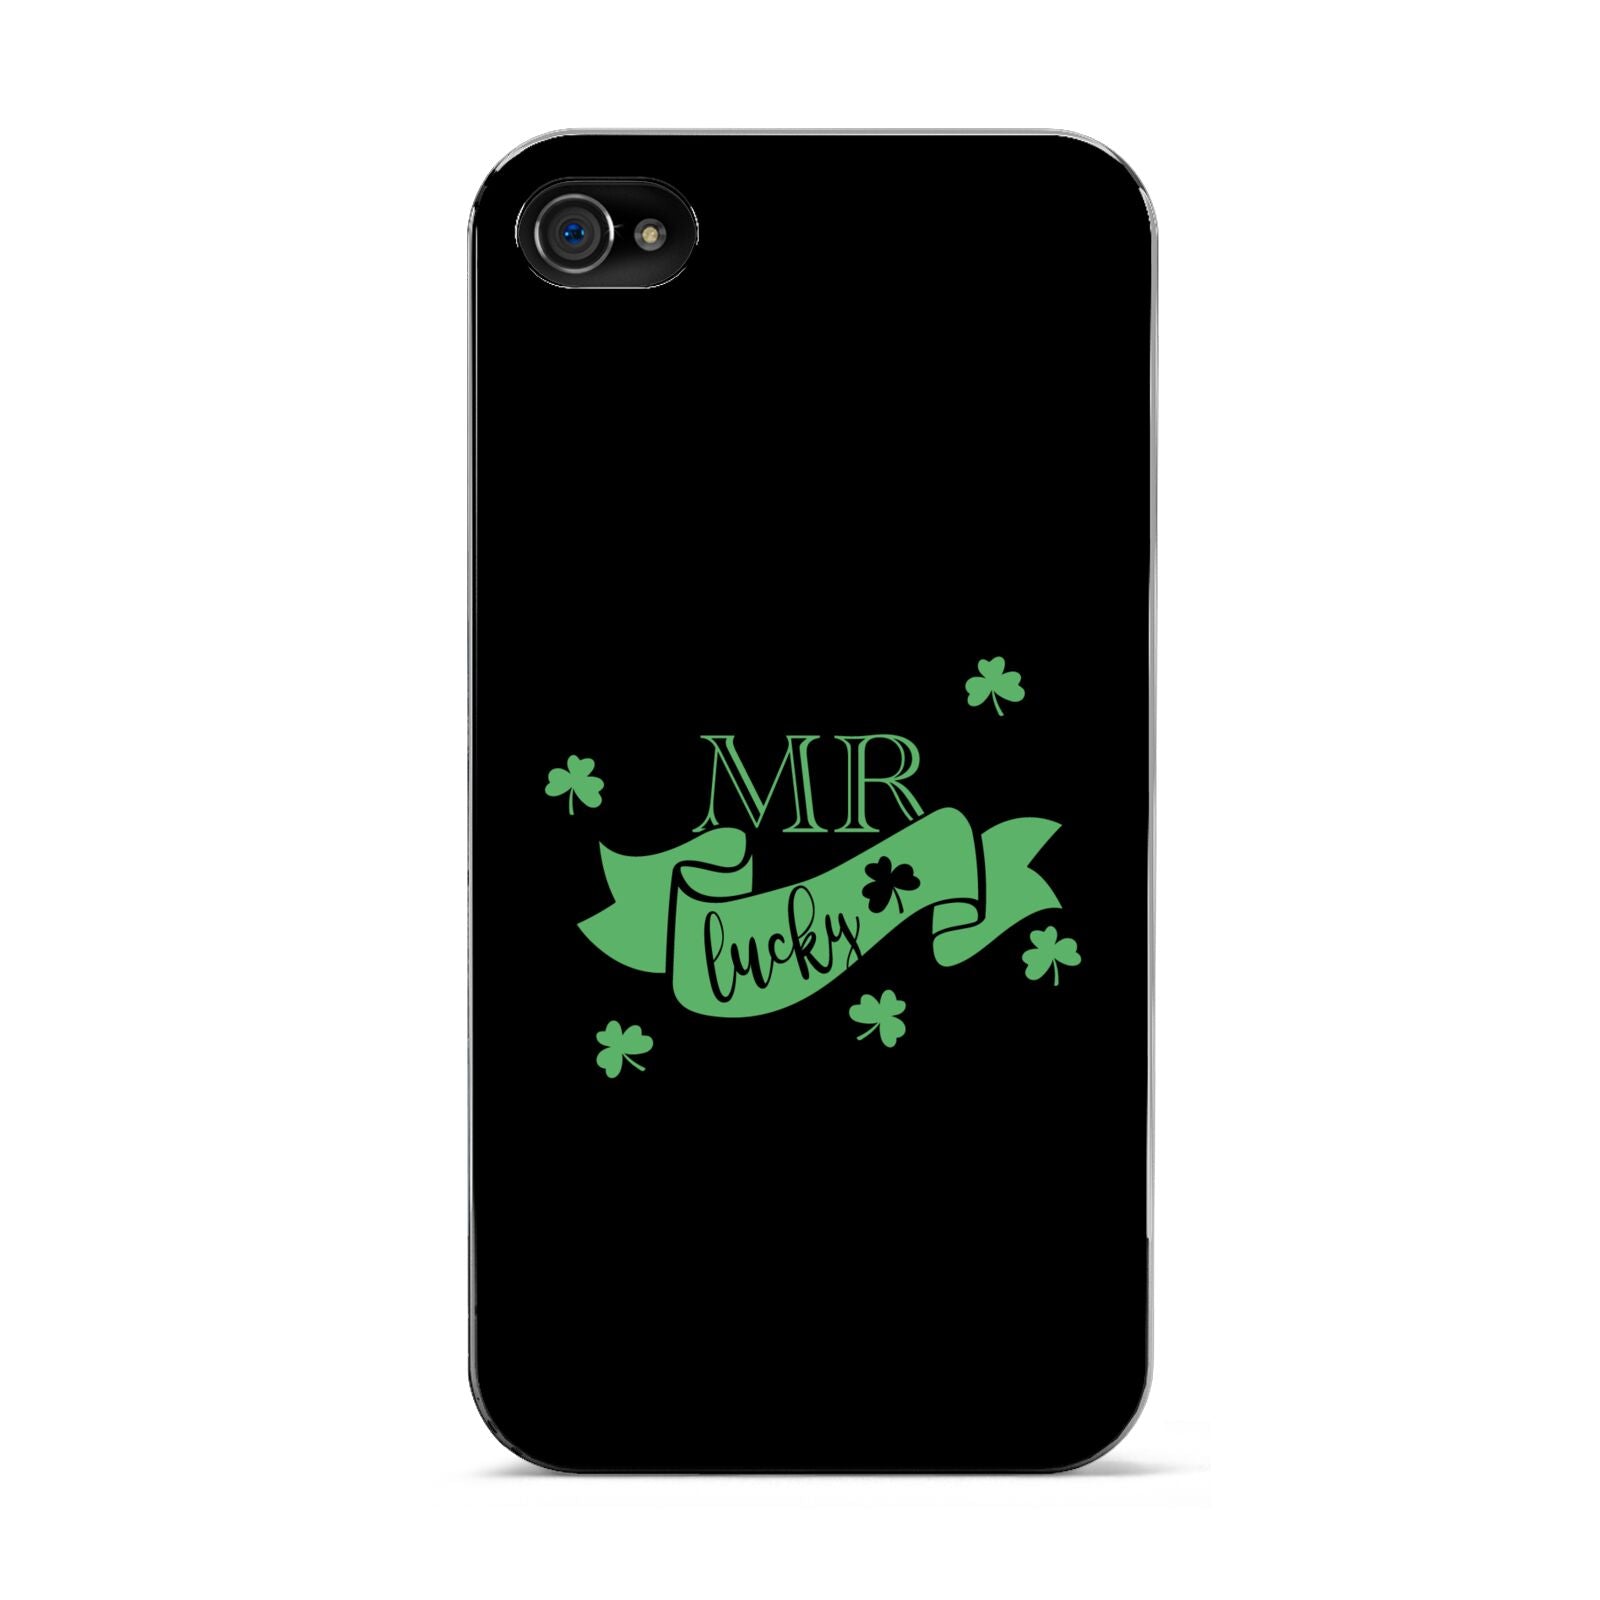 Mr Lucky Apple iPhone 4s Case